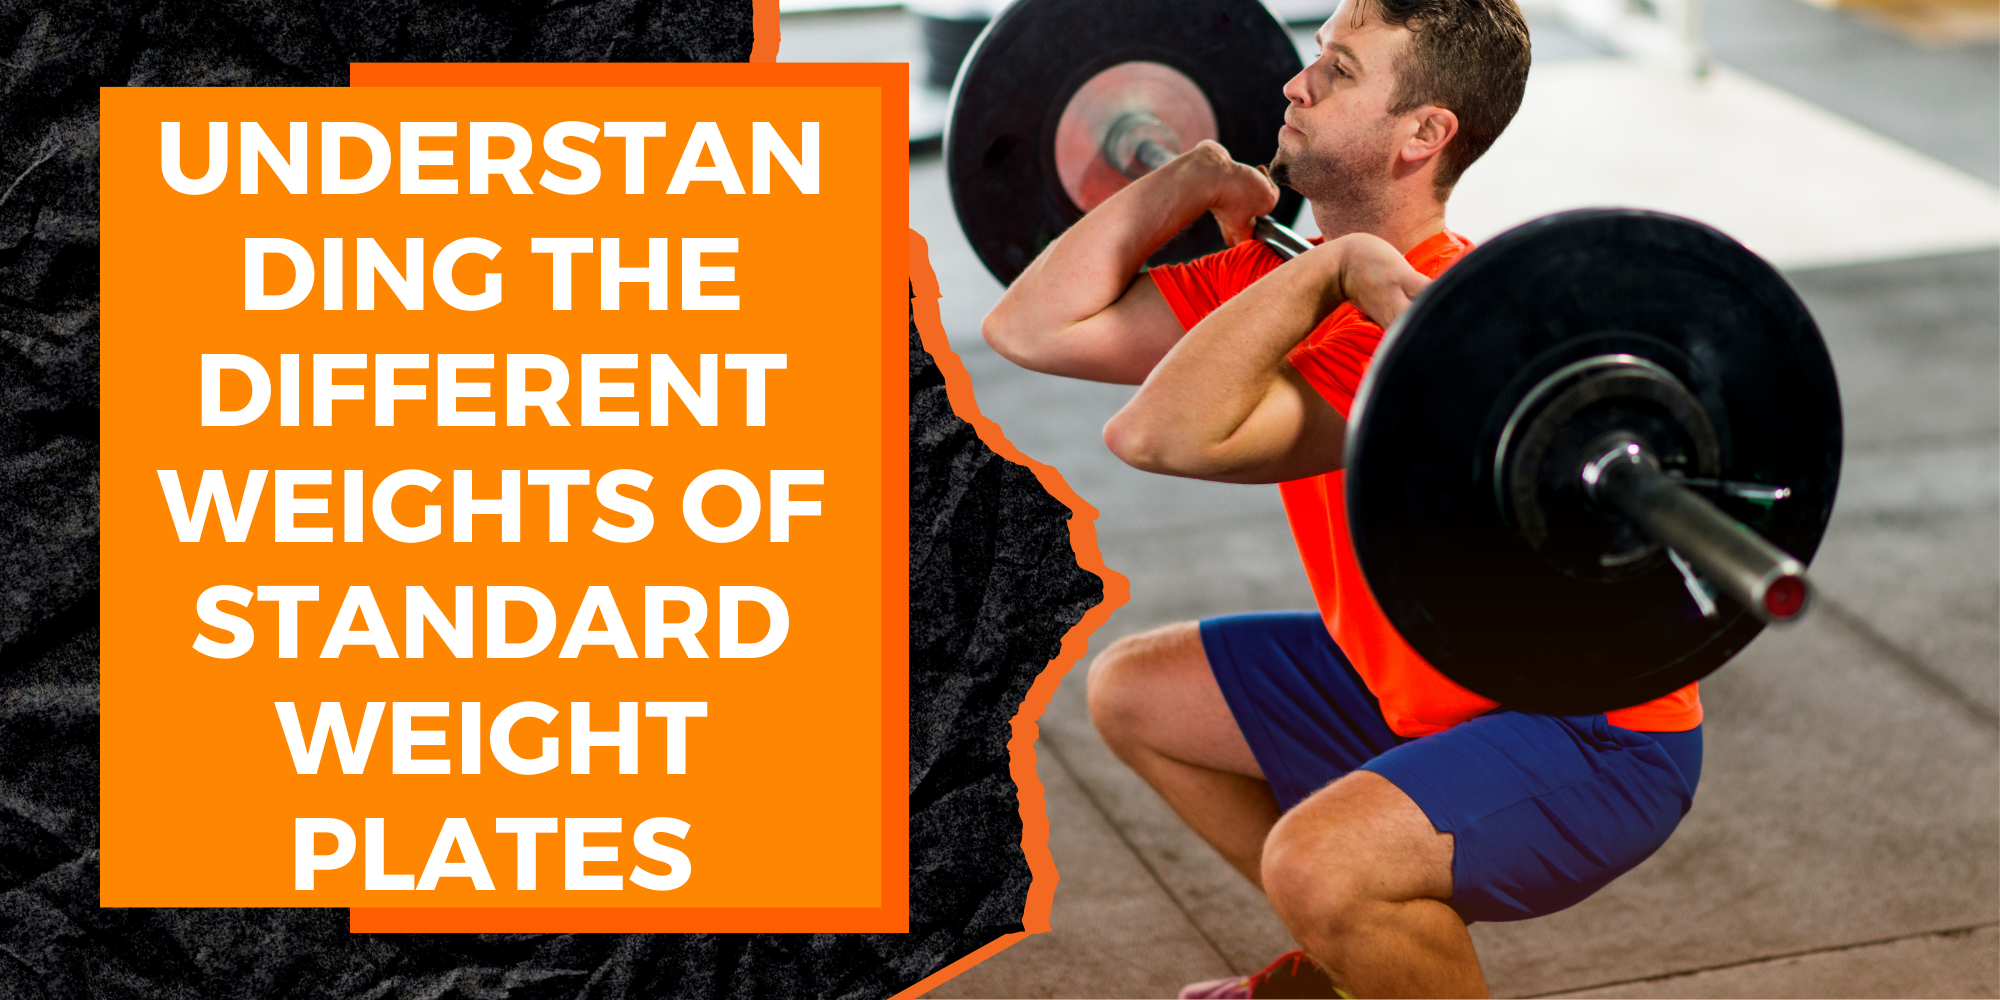 Understanding the Different Weights of Standard Weight Plates